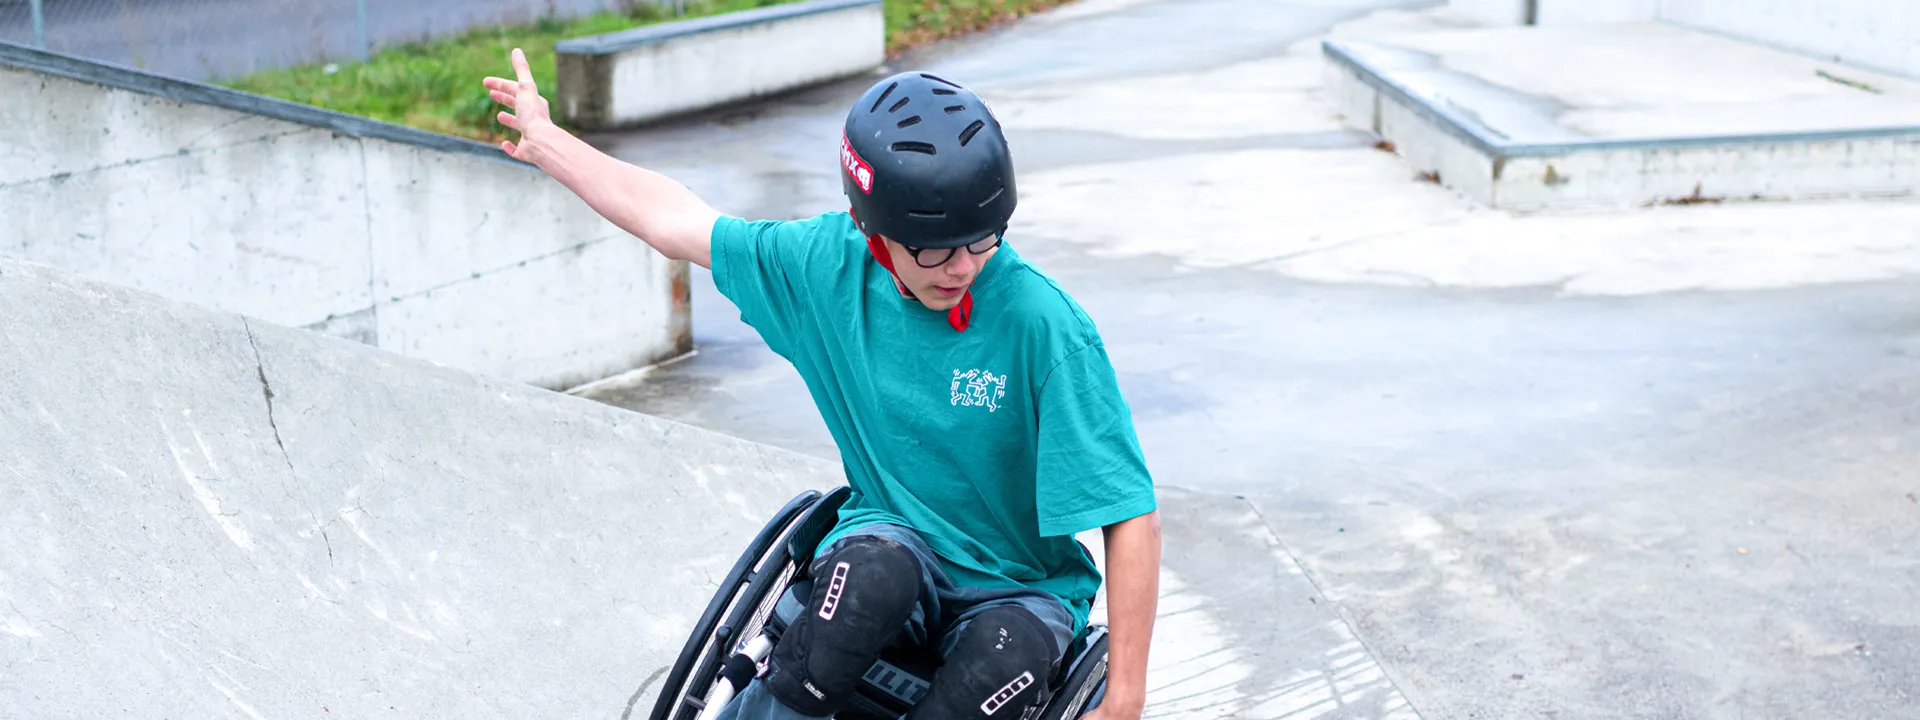 Dimitri beim Rollstuhl-Skating 